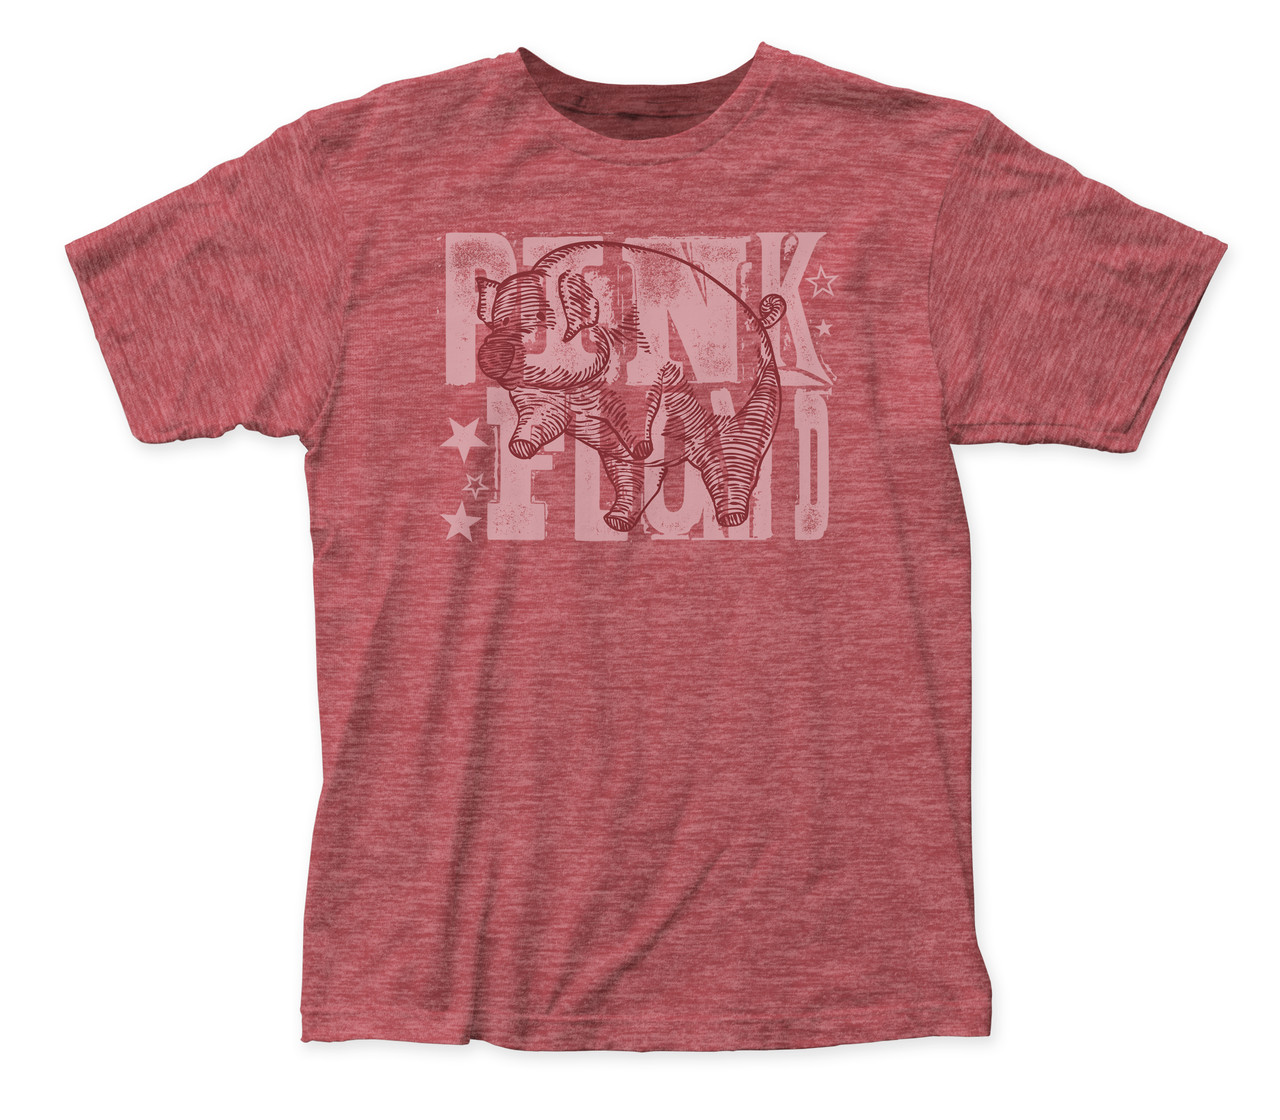 Pink Floyd Pig Slim Fit T-Shirt - Merch2rock Alternative Clothing